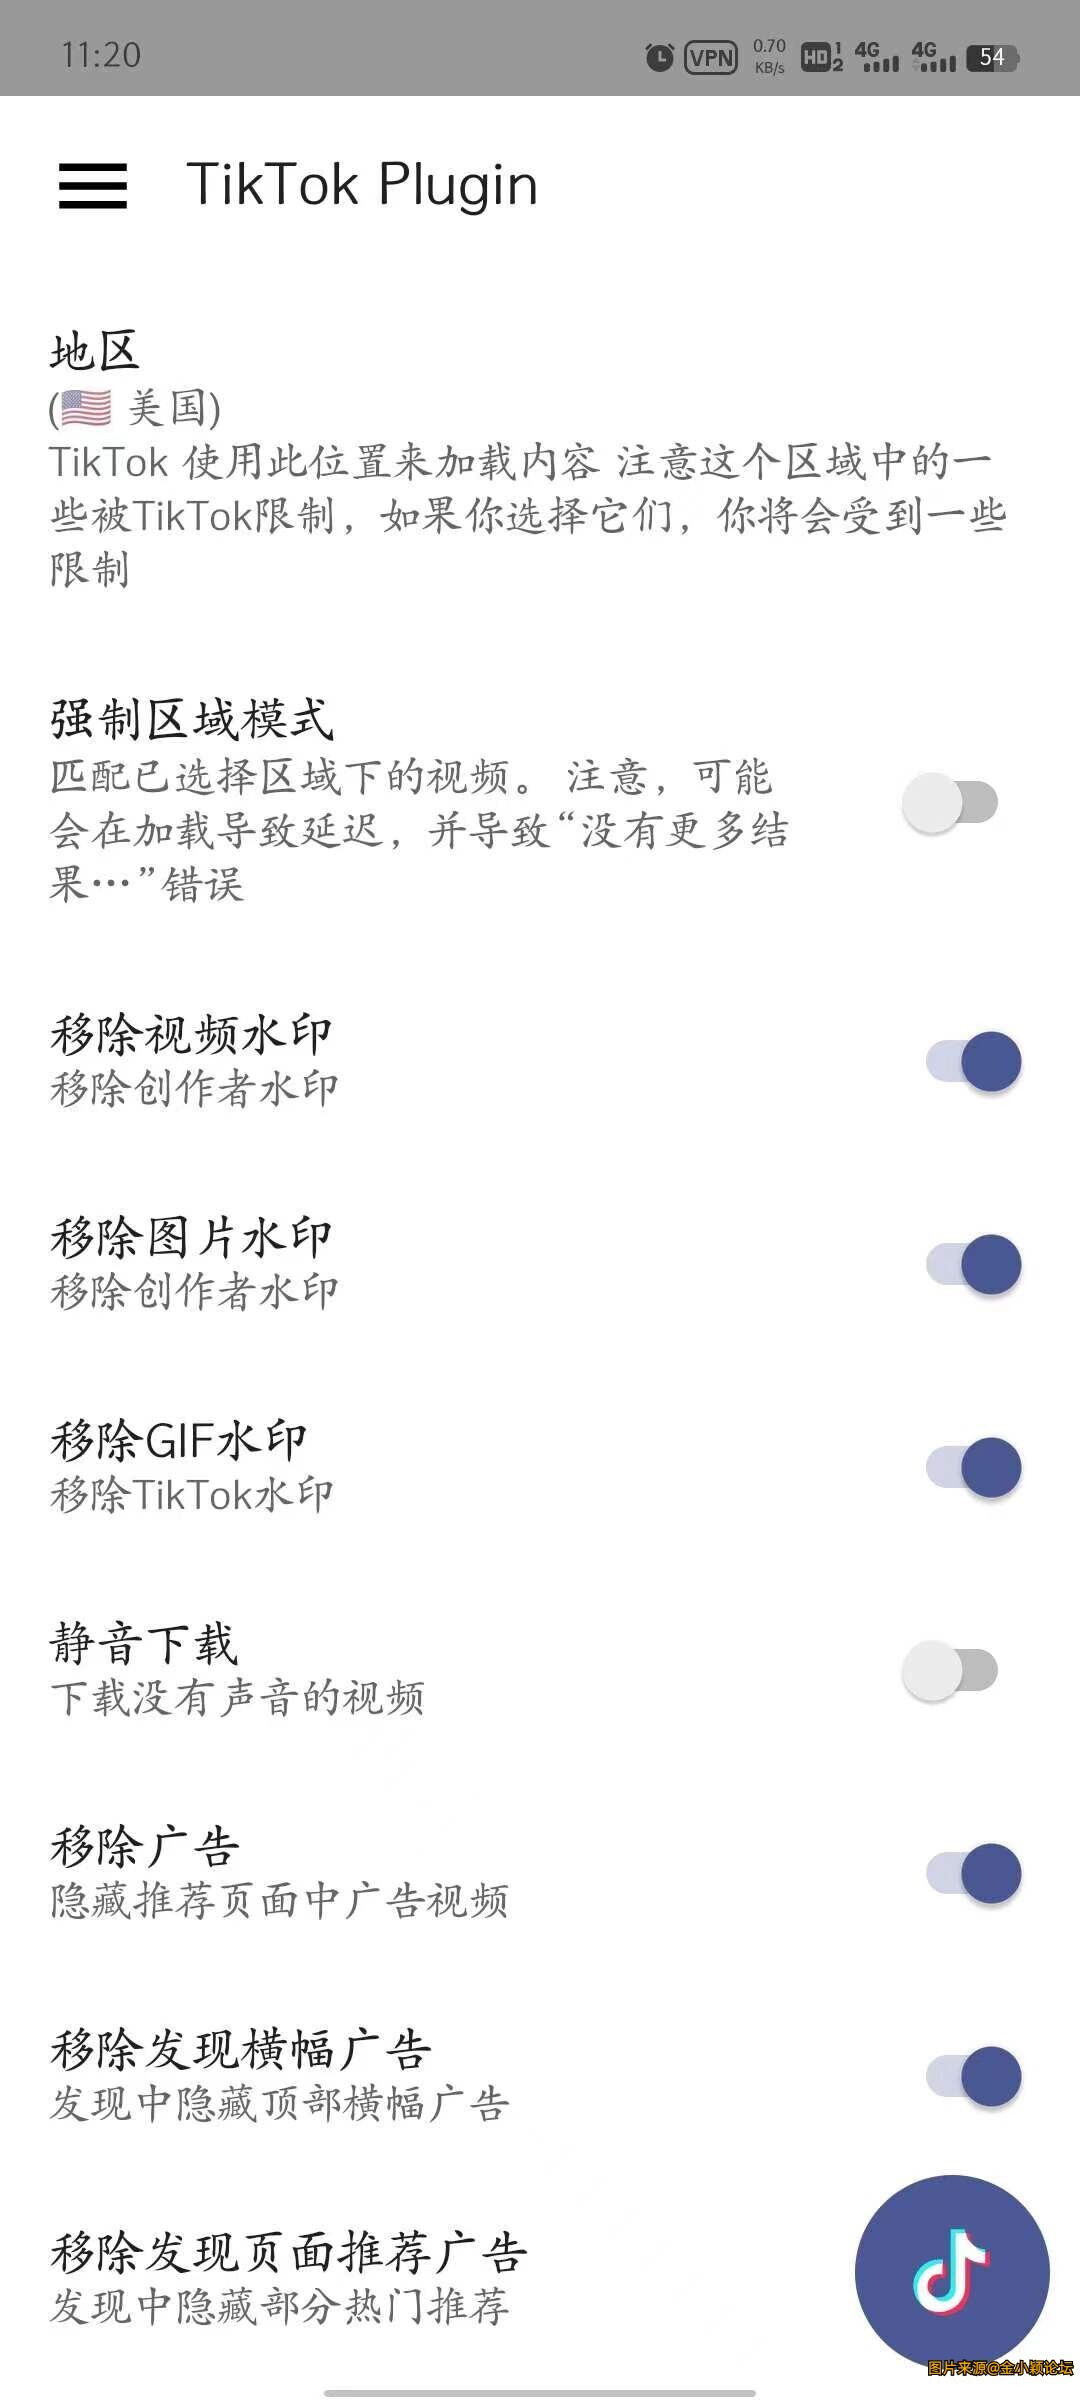 tik tokv32.0.4，解锁地区限制，免拔卡中文版。